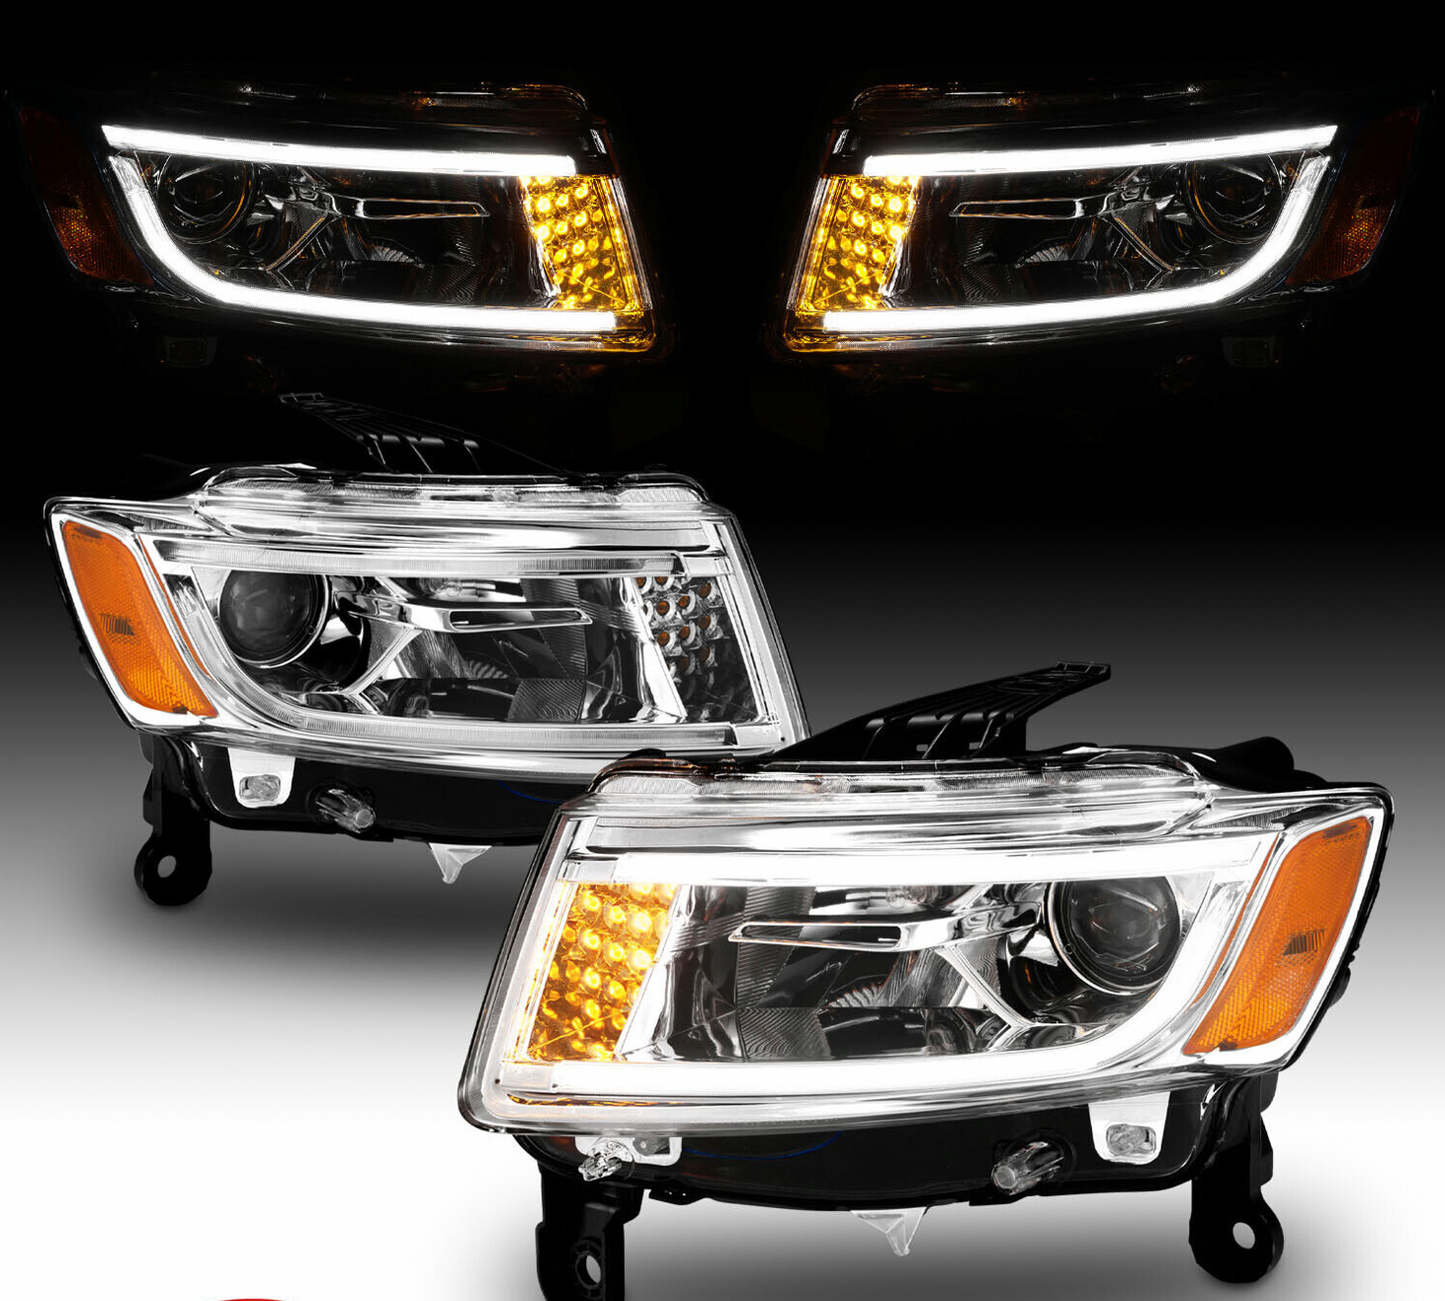 2014-2016 Jeep Grand Cherokee Bar Style Projector Headlights